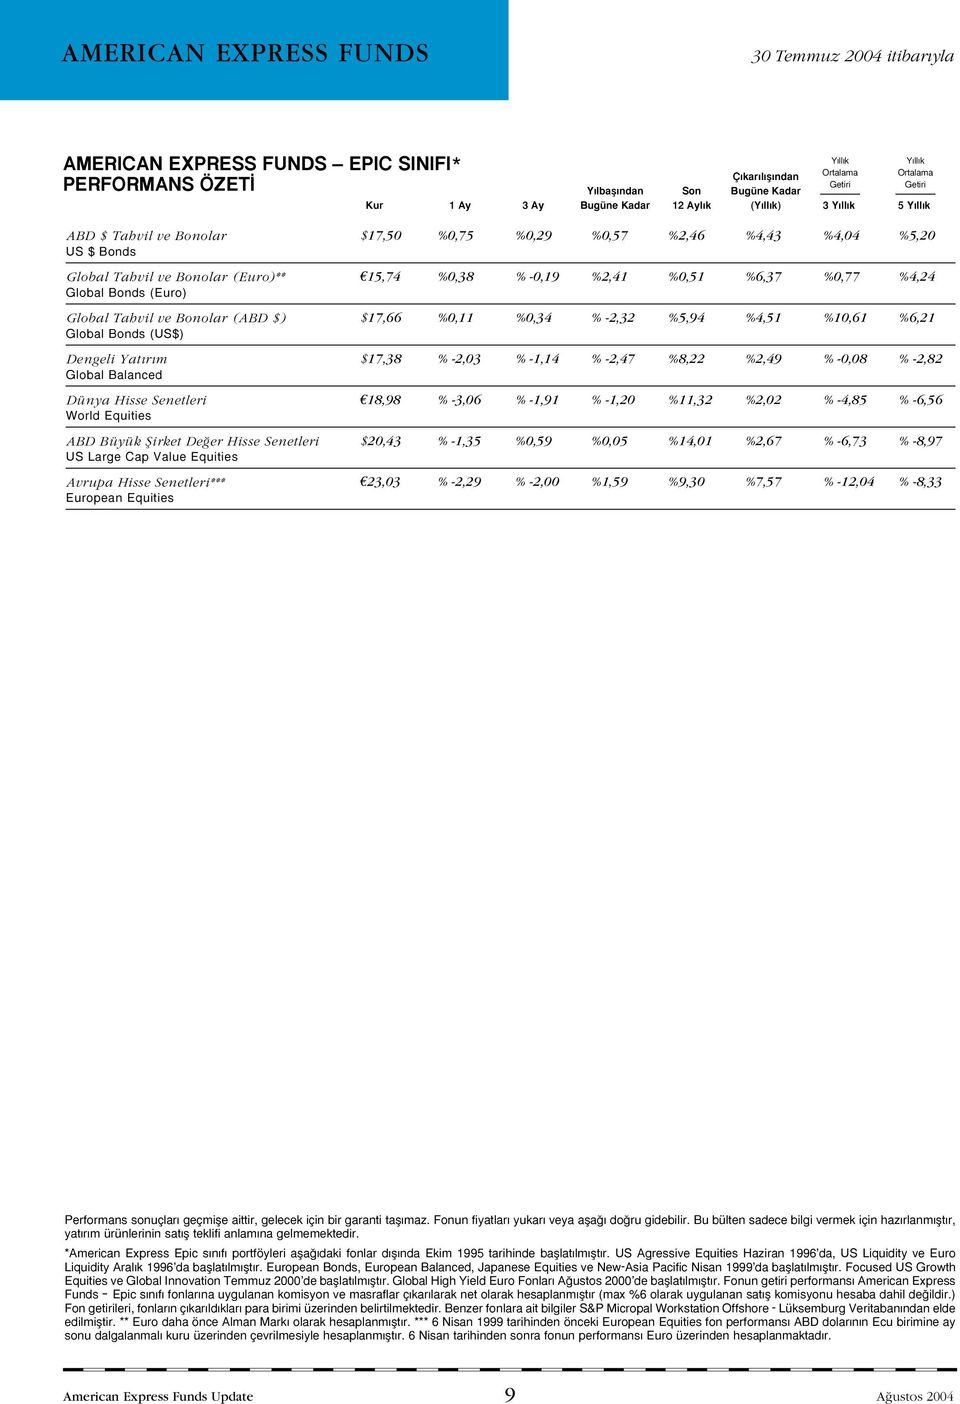 Senetleri World Equities ABD Büyük fiirket De er Hisse Senetleri US Large Cap Value Equities Avrupa Hisse Senetleri*** European Equities $17,50 %0,75 %0,29 %0,57 %2,46 %4,43 %4,04 %5,20 15,74 %0,38 %